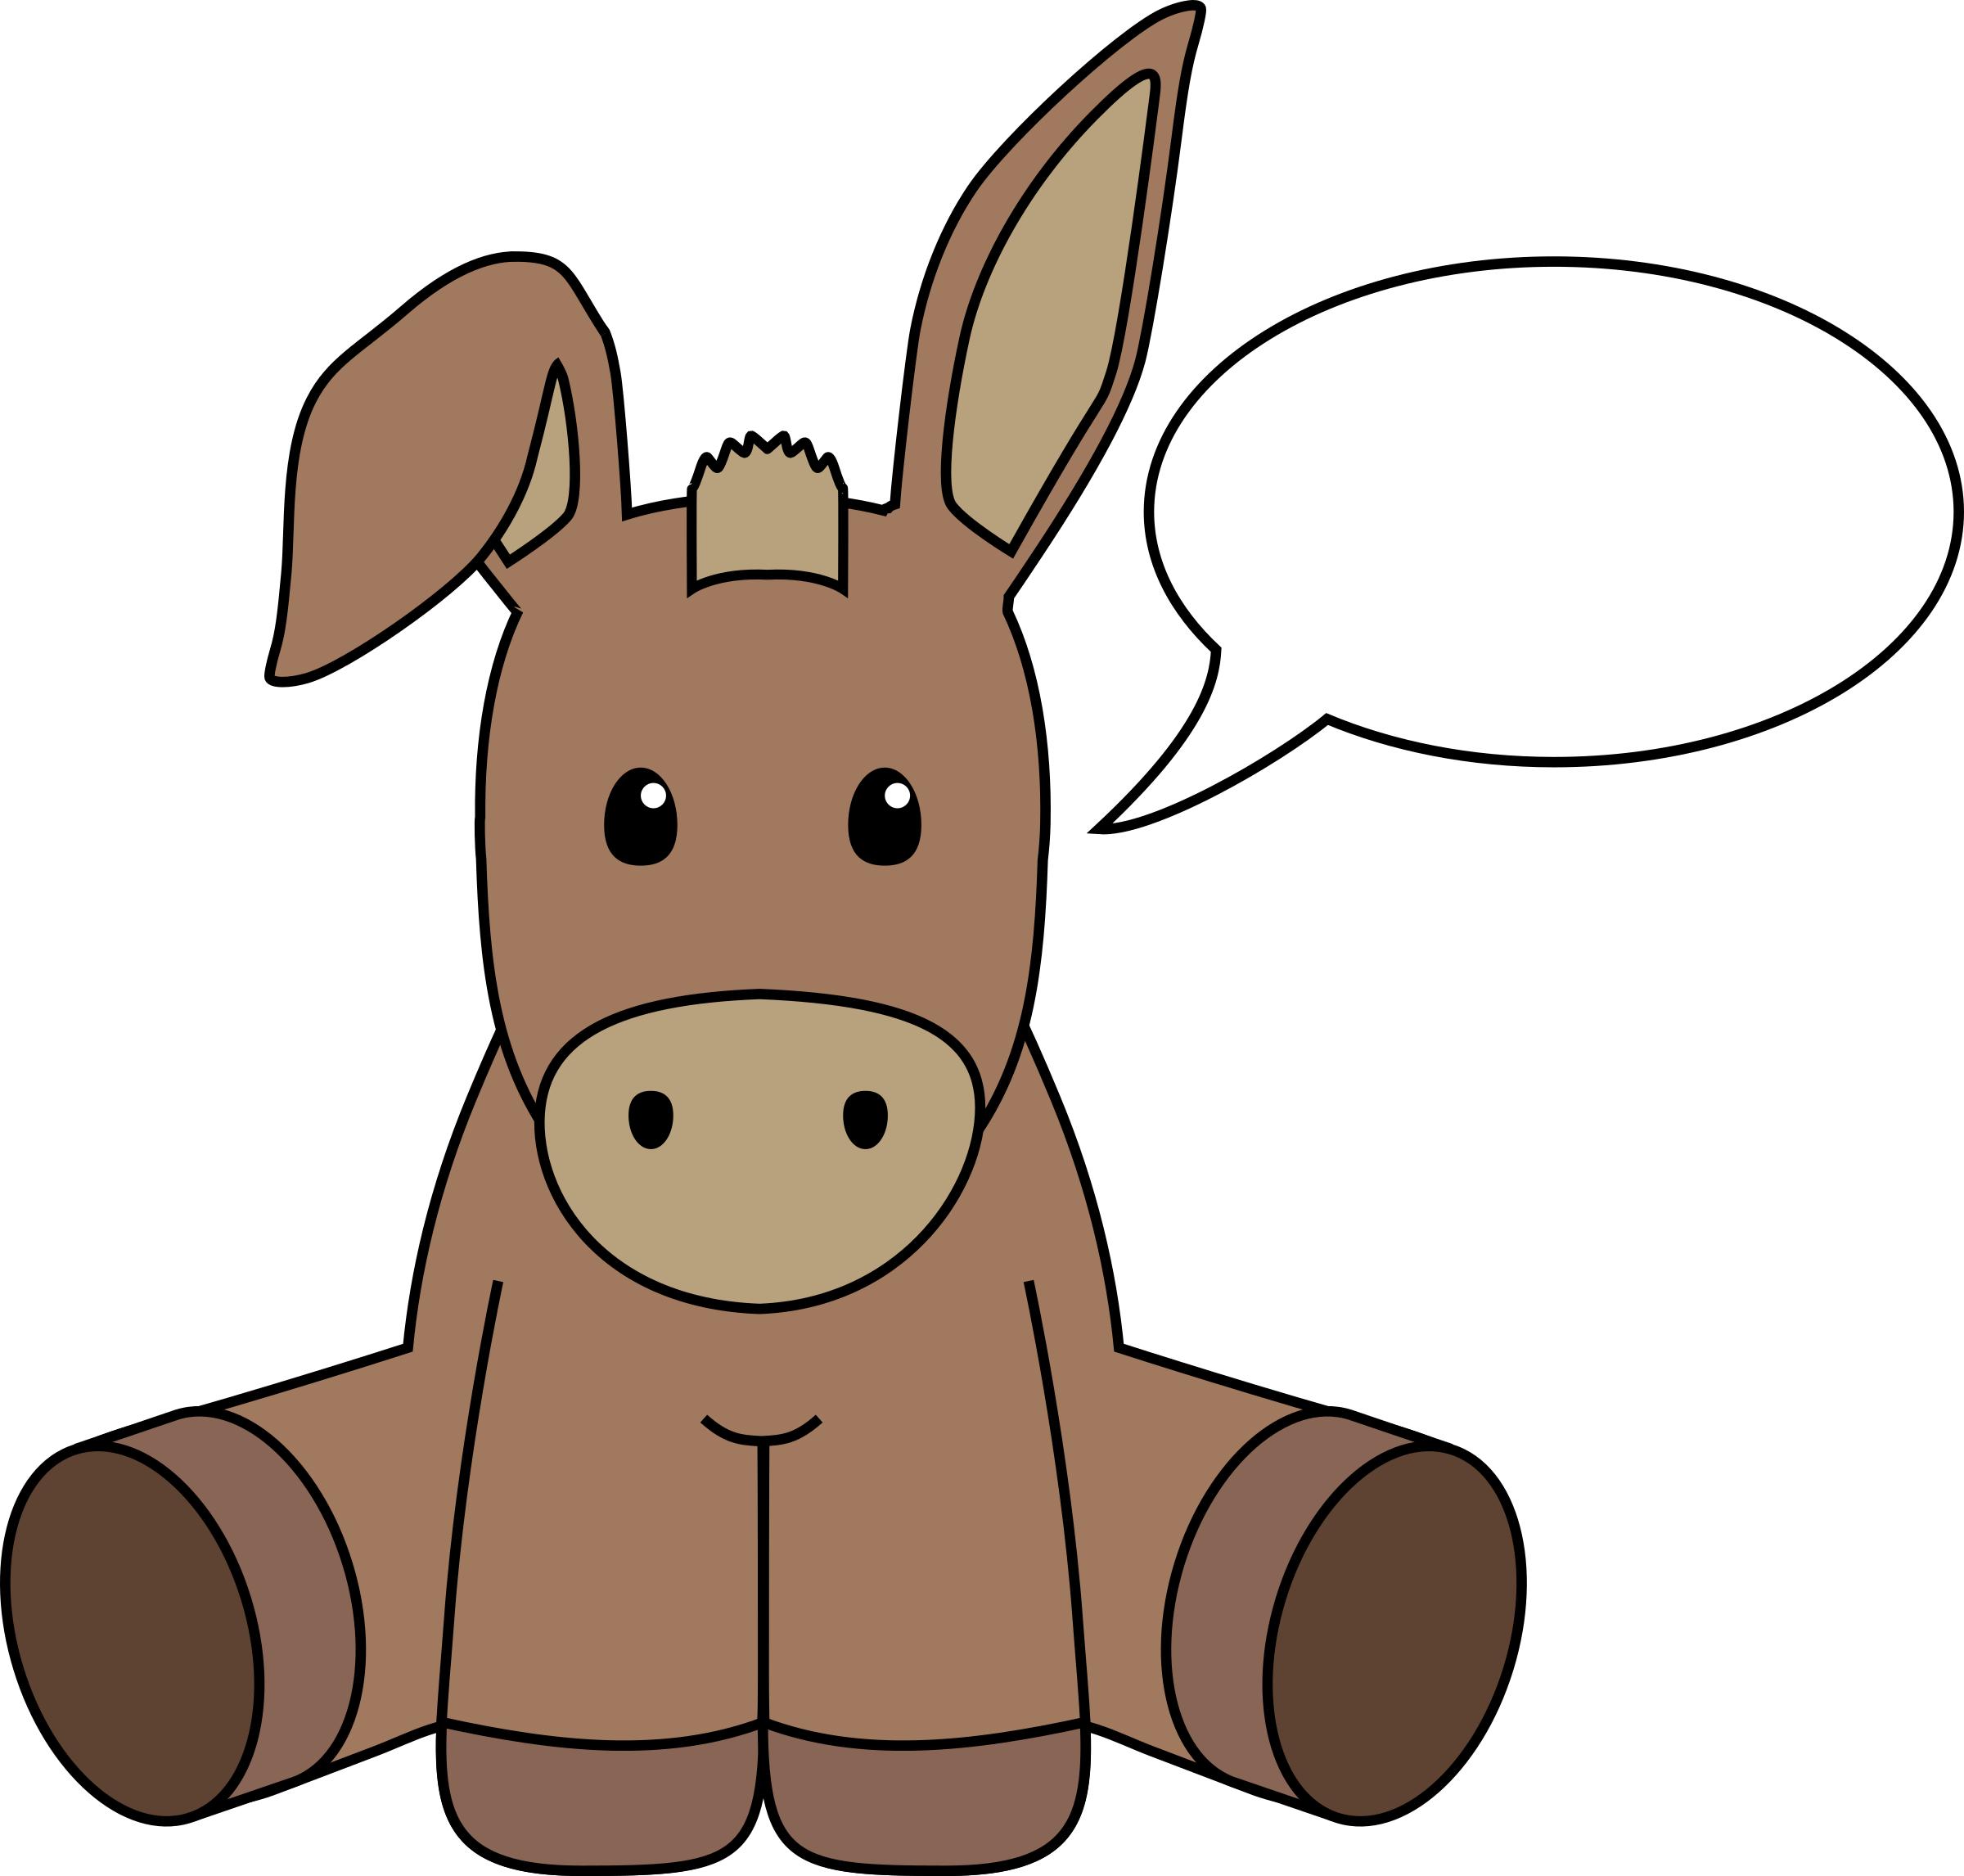 Help jazz up my donkey logo png